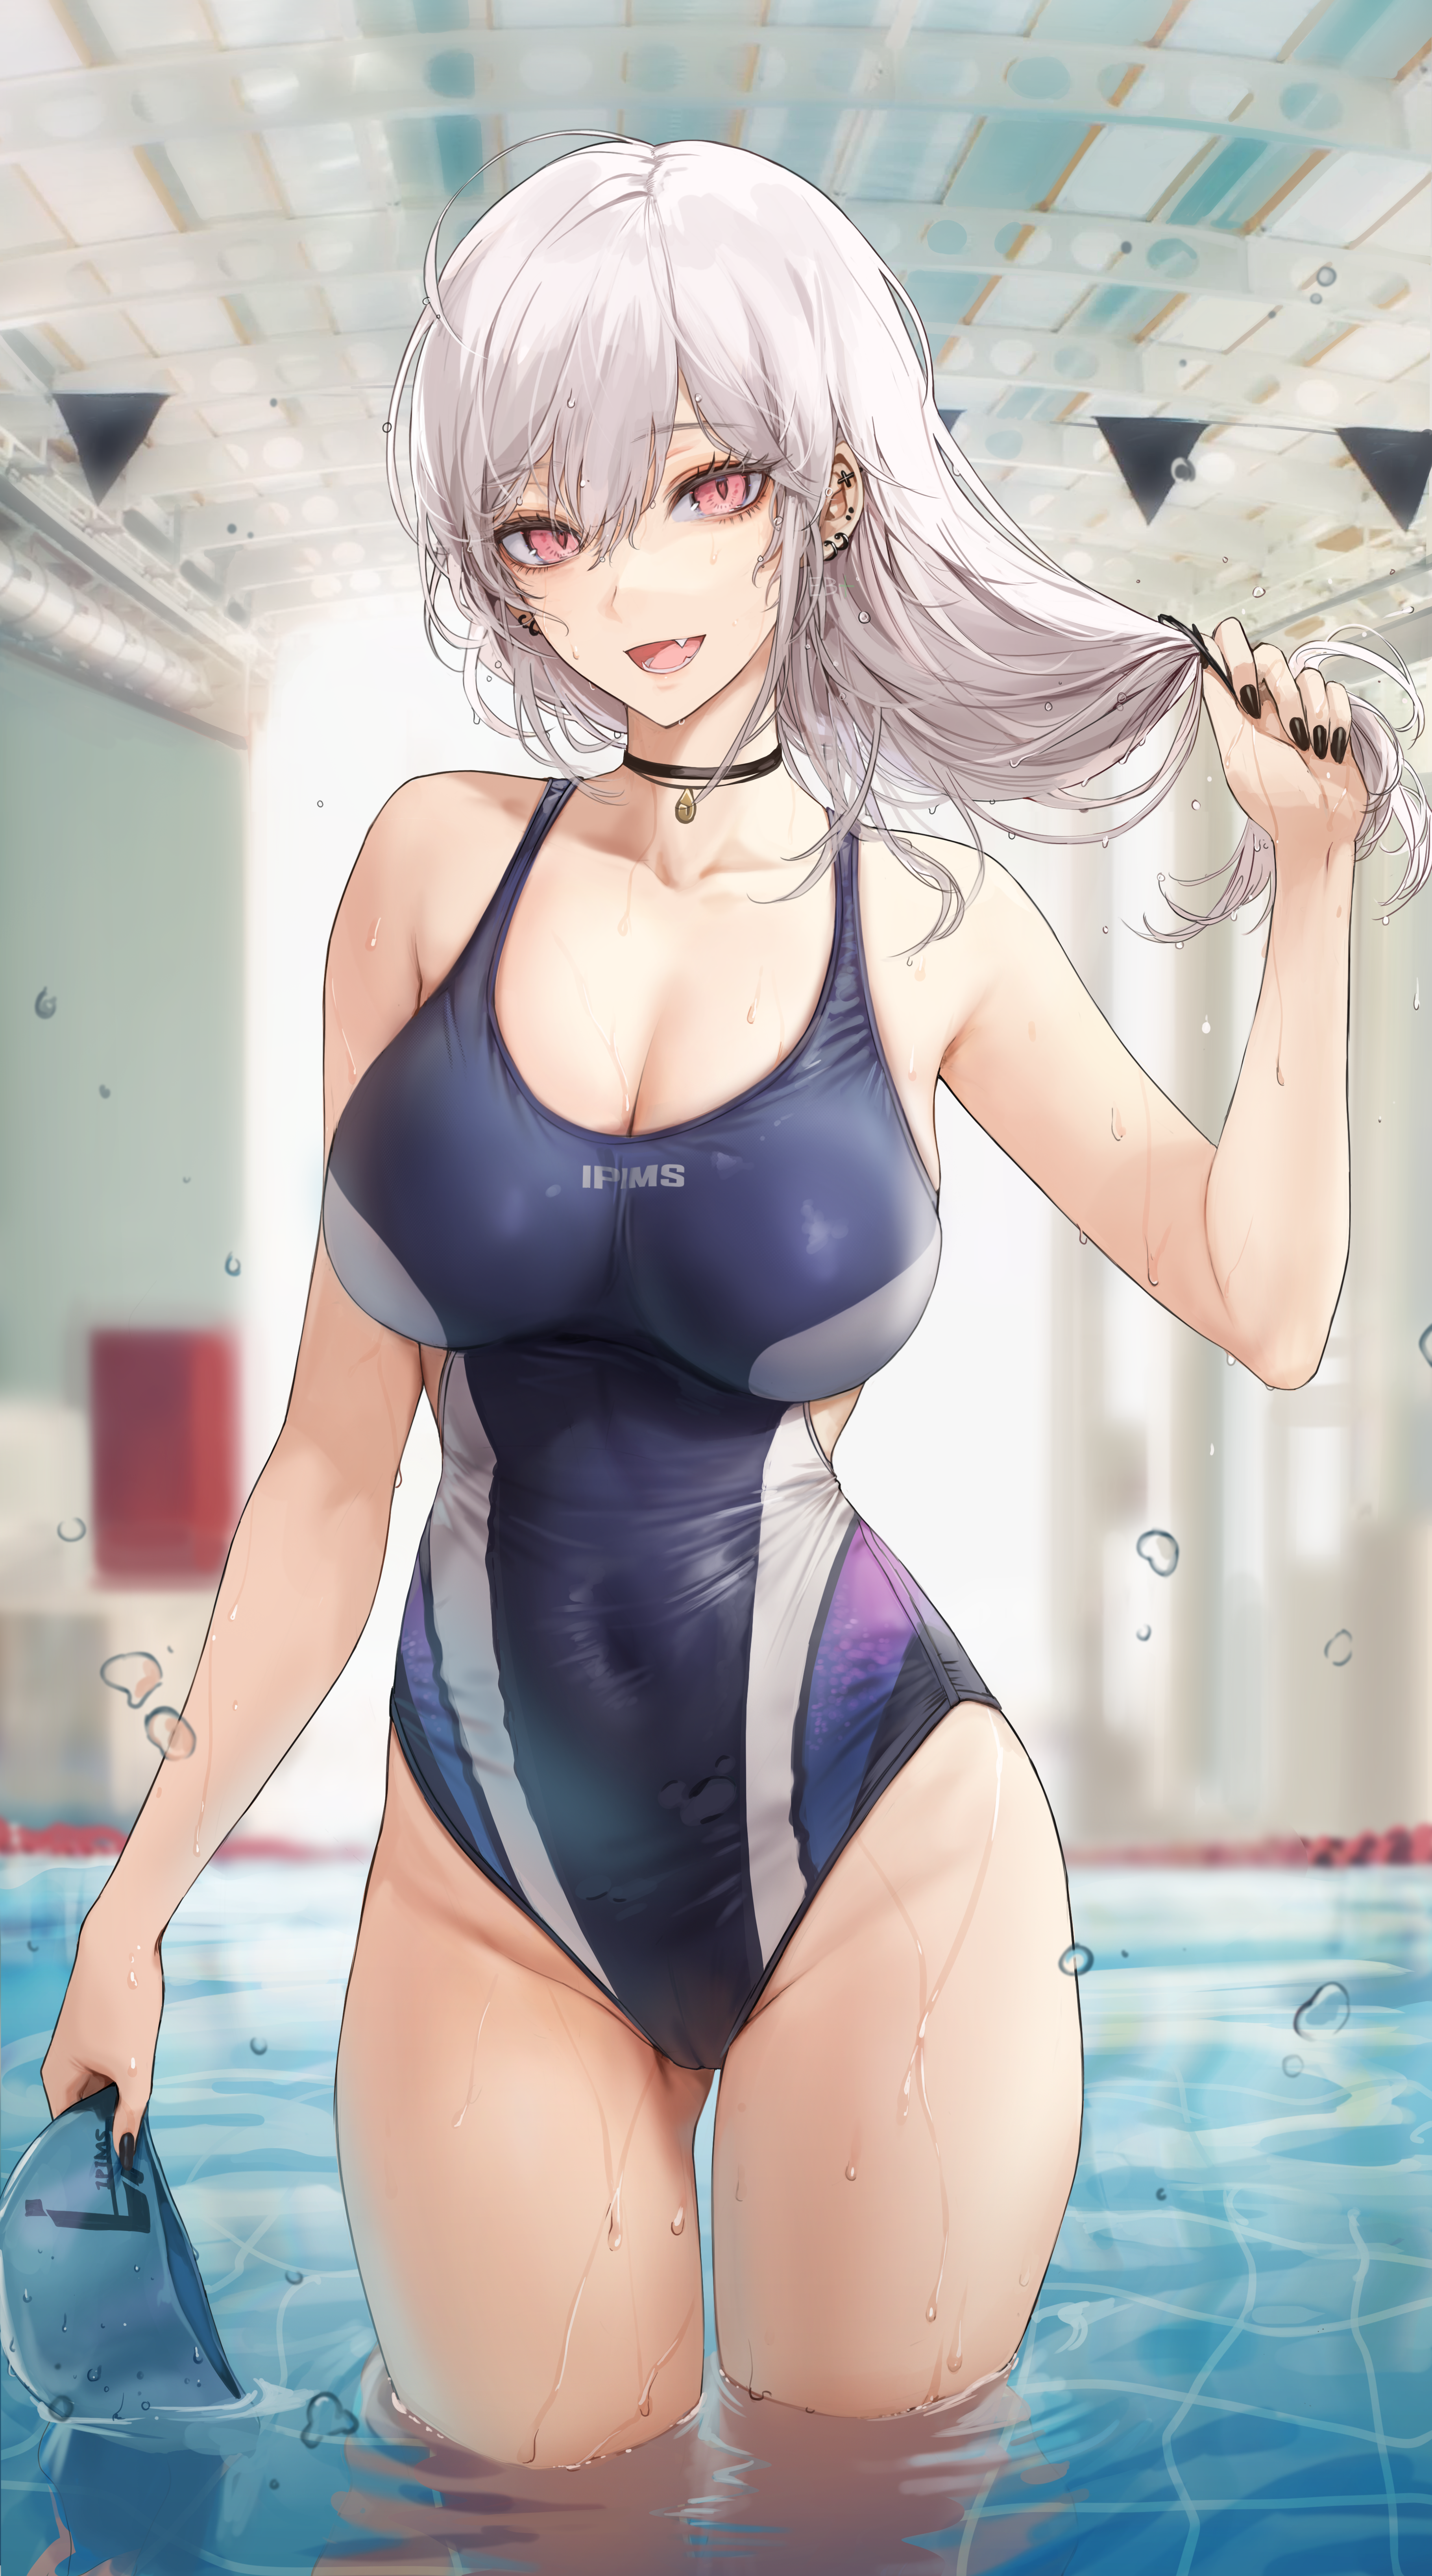 Anime 3639x6547 one-piece swimsuit swimwear big boobs silver hair pink eyes anime girls artwork EB+ water wet body